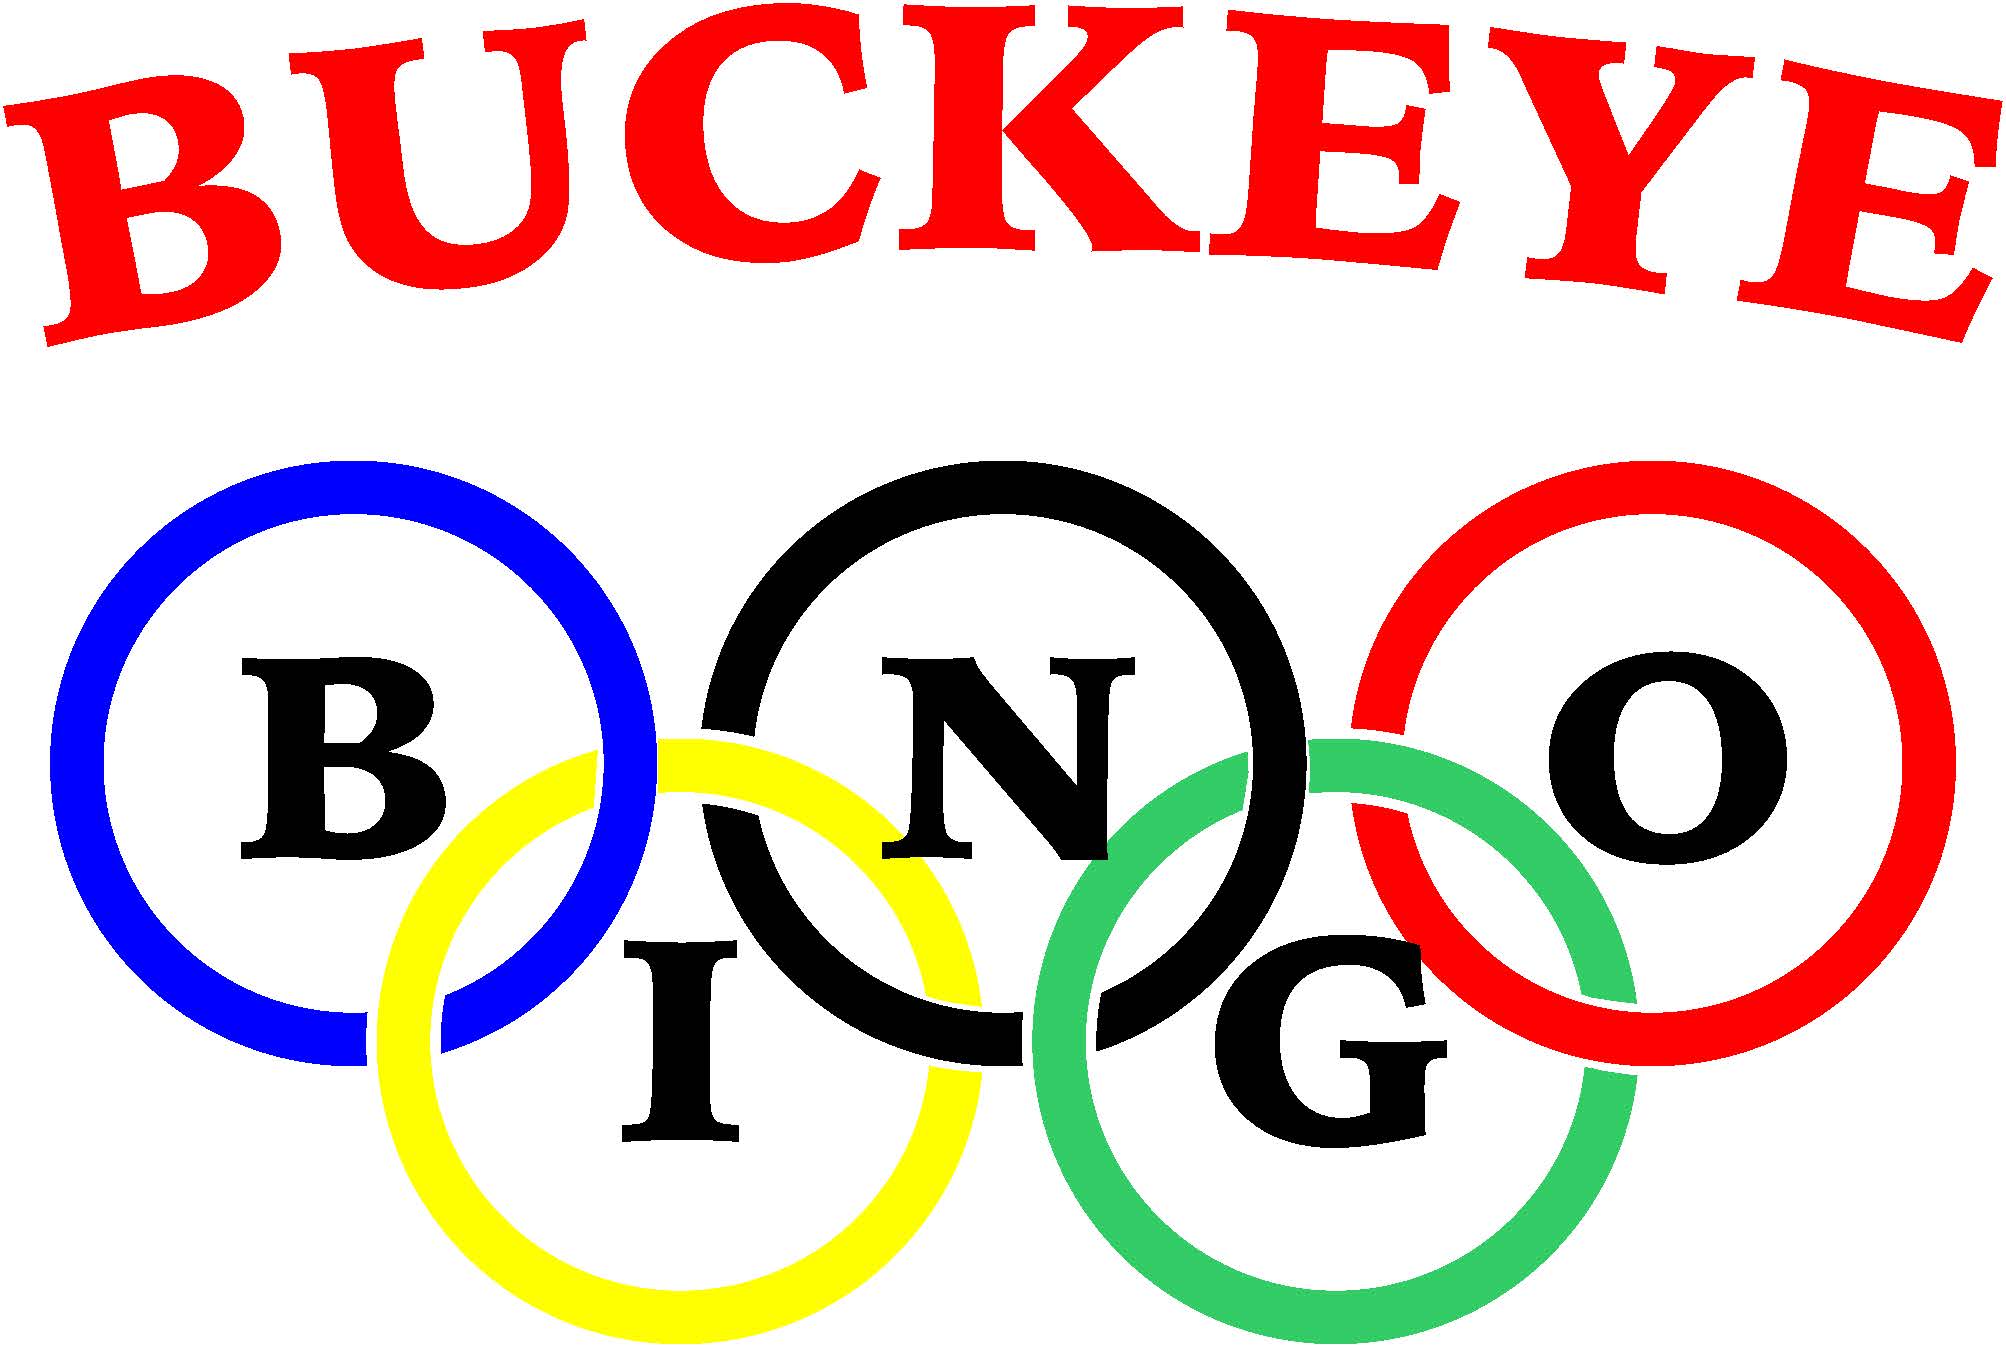 Buckeye Bingo (presentación)